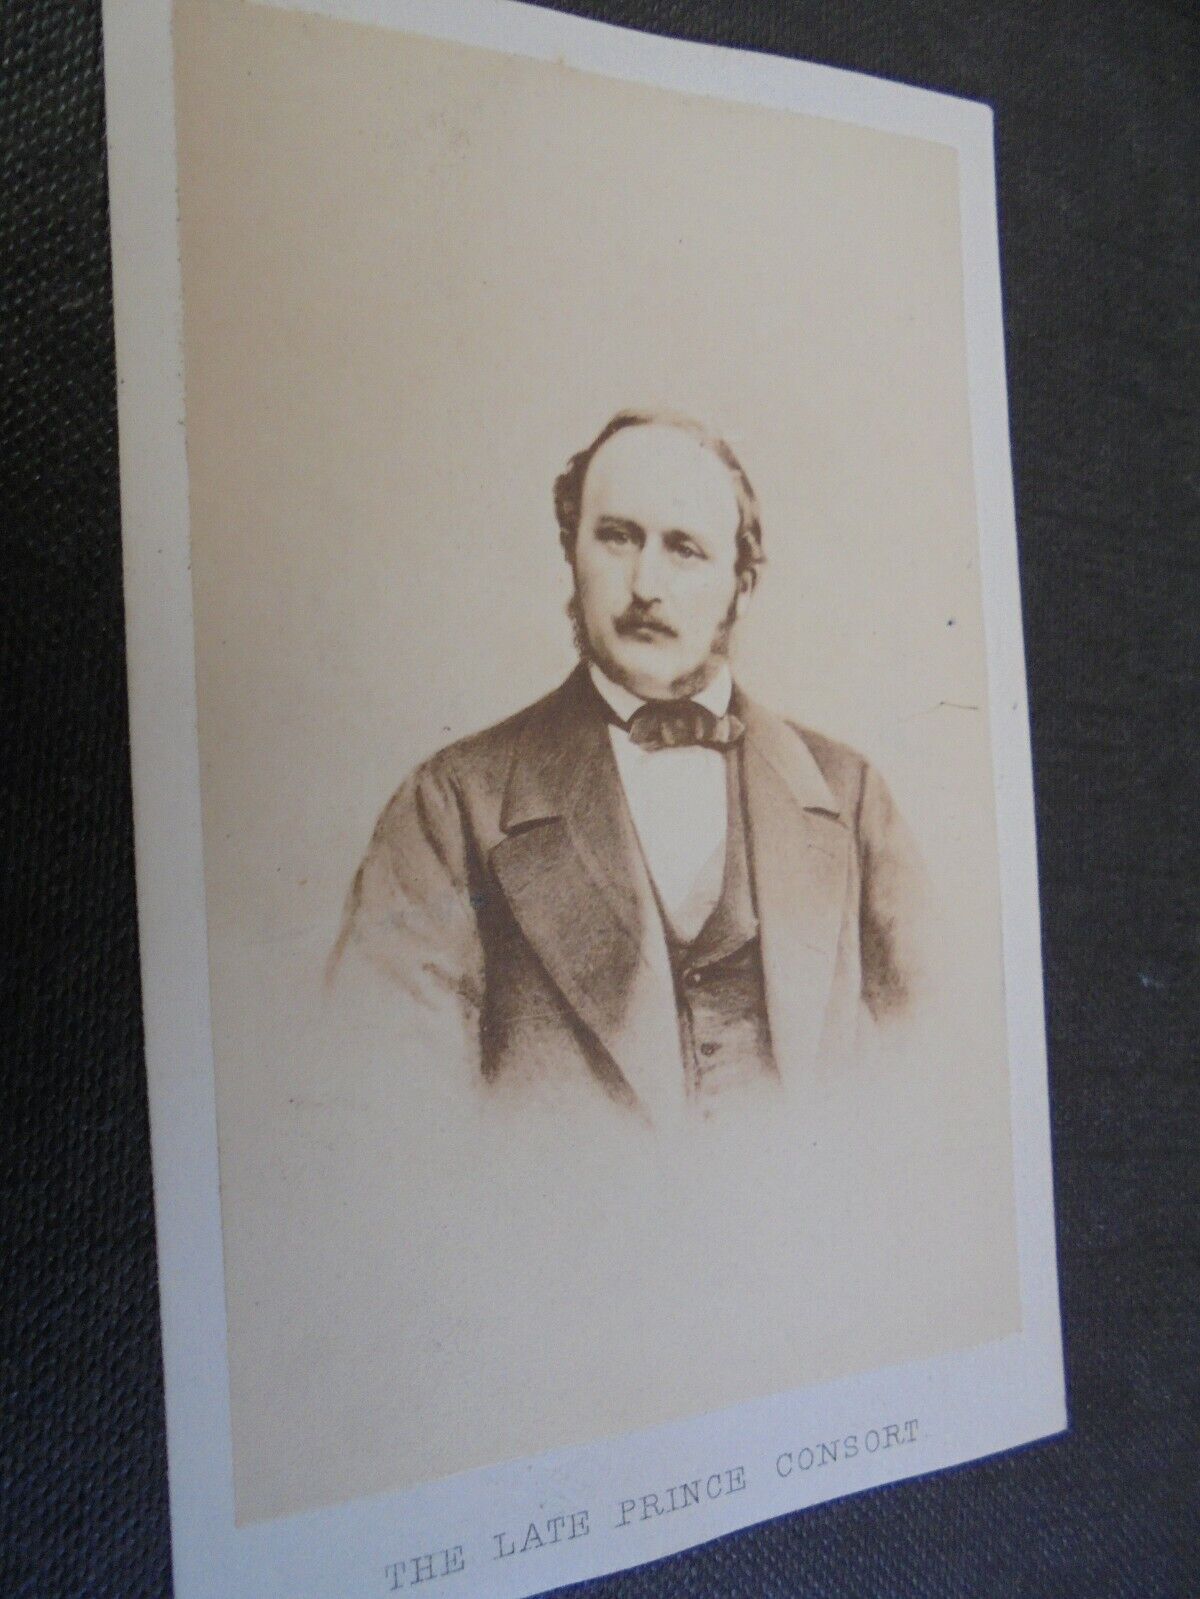 Cdv photograph The Late consort Prince Albert by Mason at Brighton c1860s